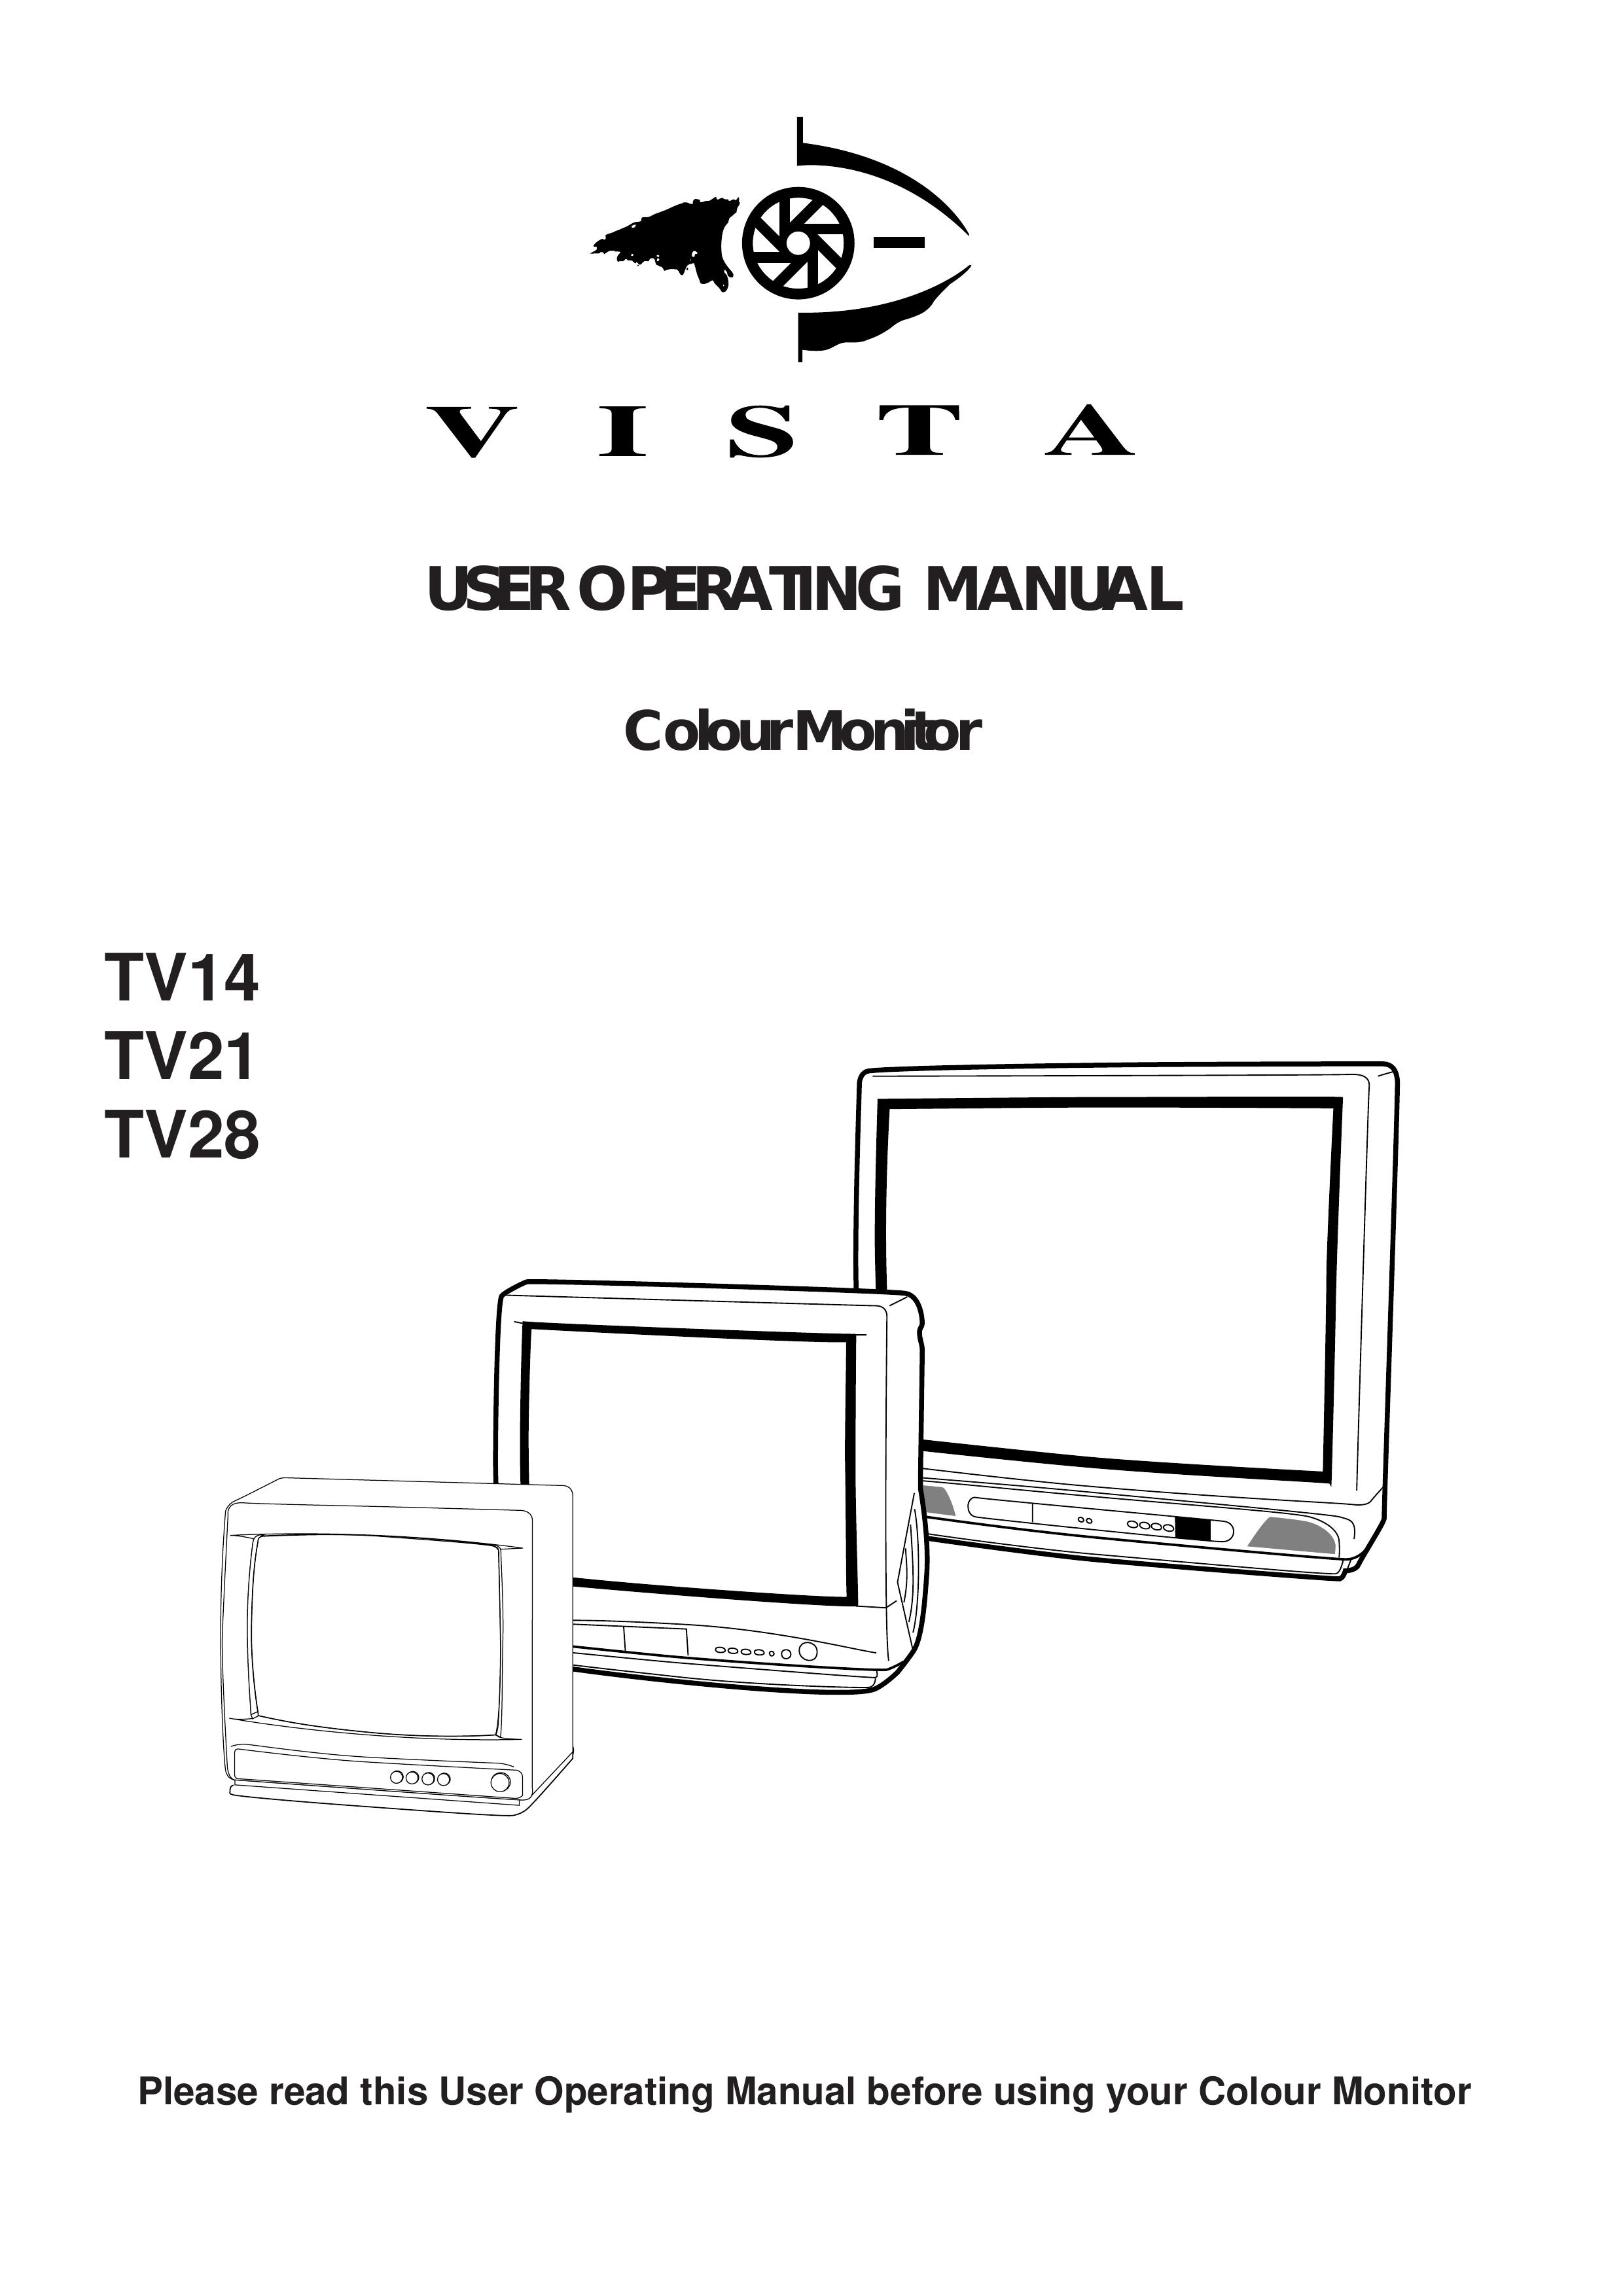 Vista TV14 Blood Glucose Meter User Manual